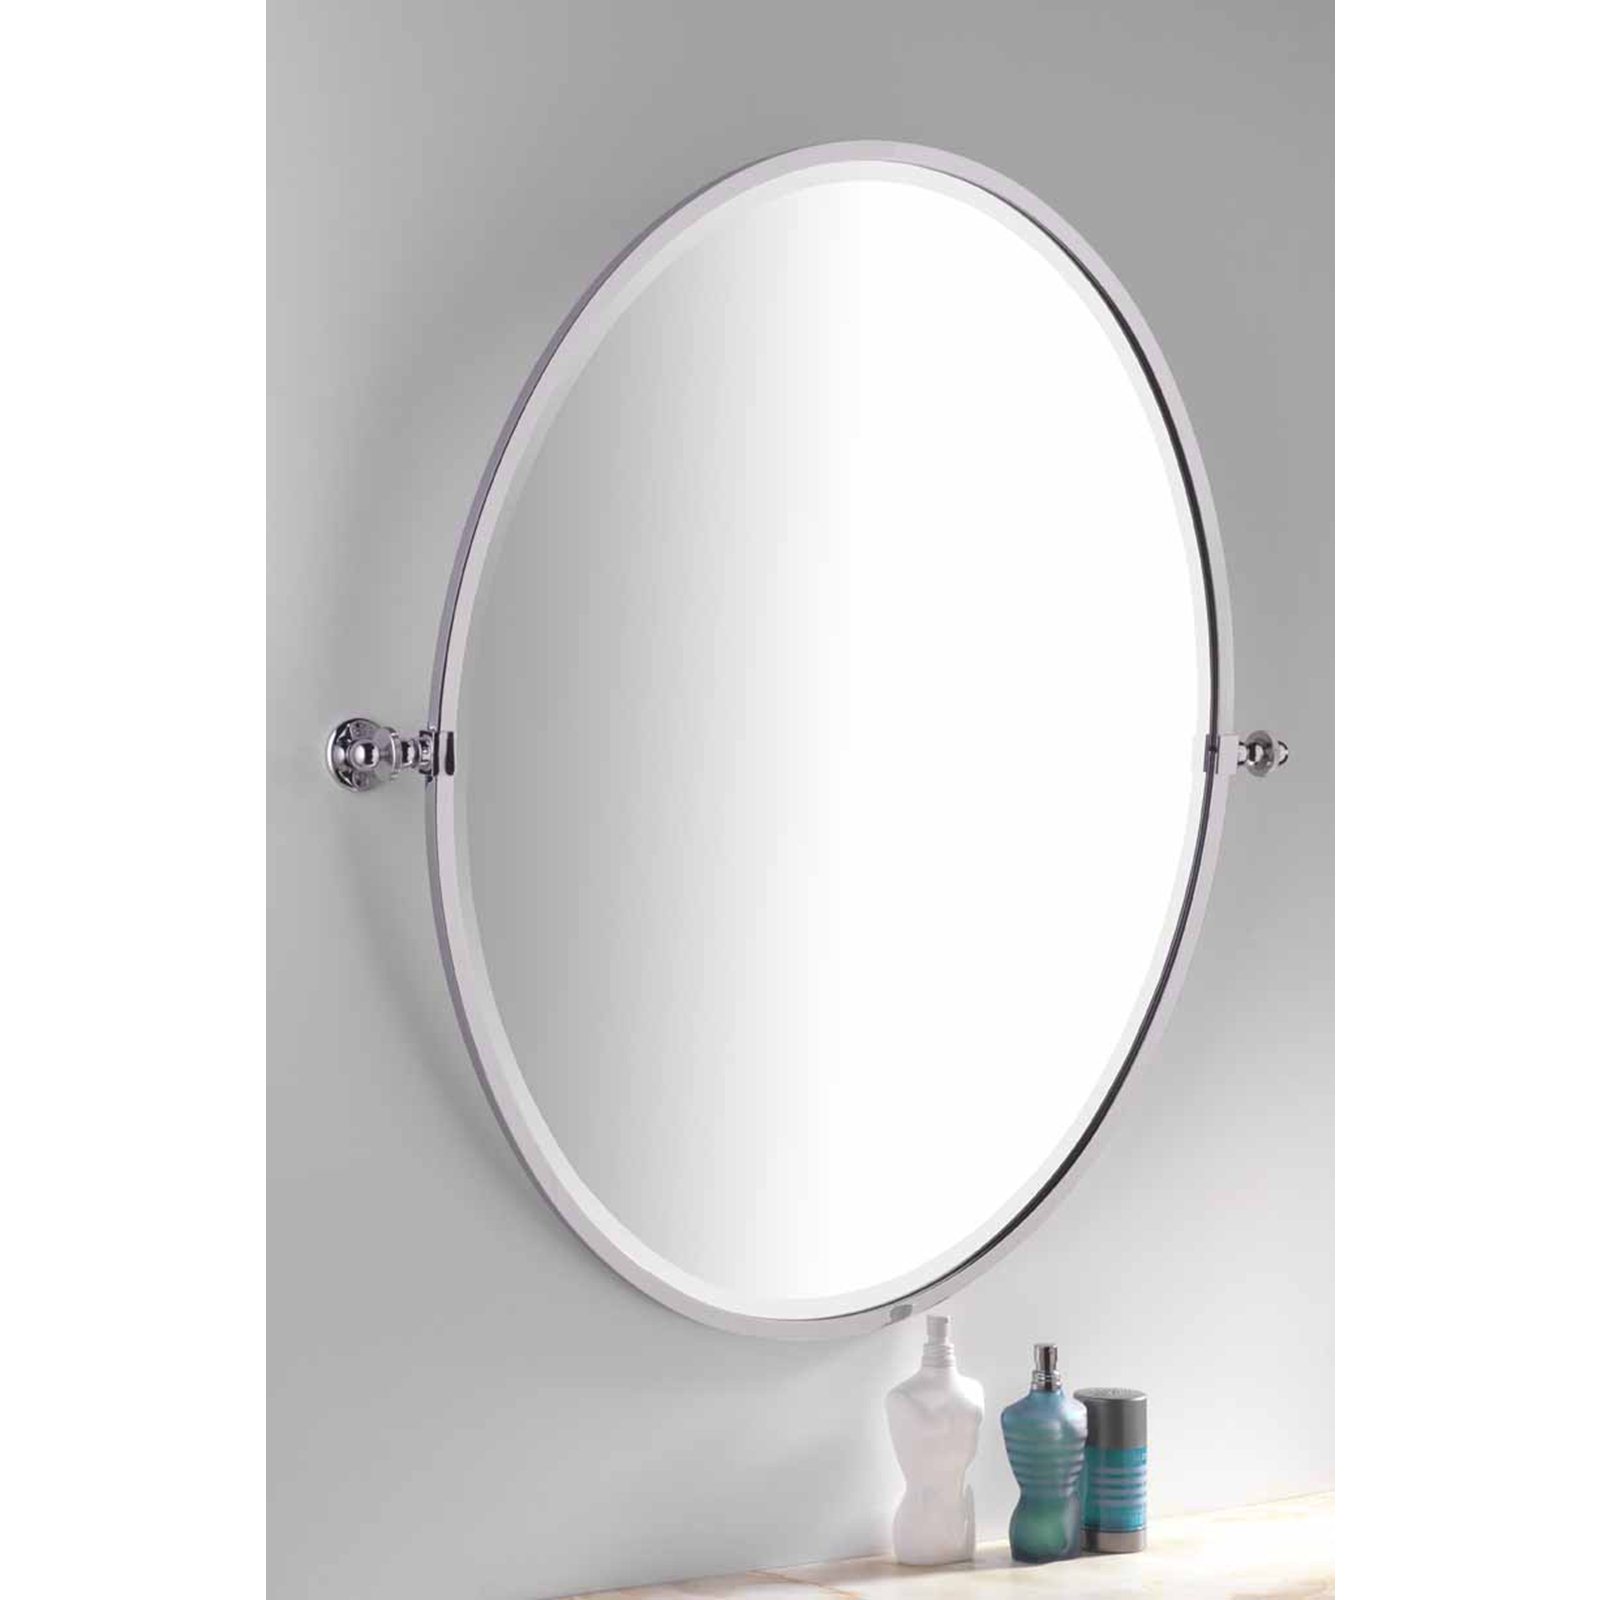 Handmade Bathroom Oval Framed Tilting, Large Round Tilting Bathroom Mirror